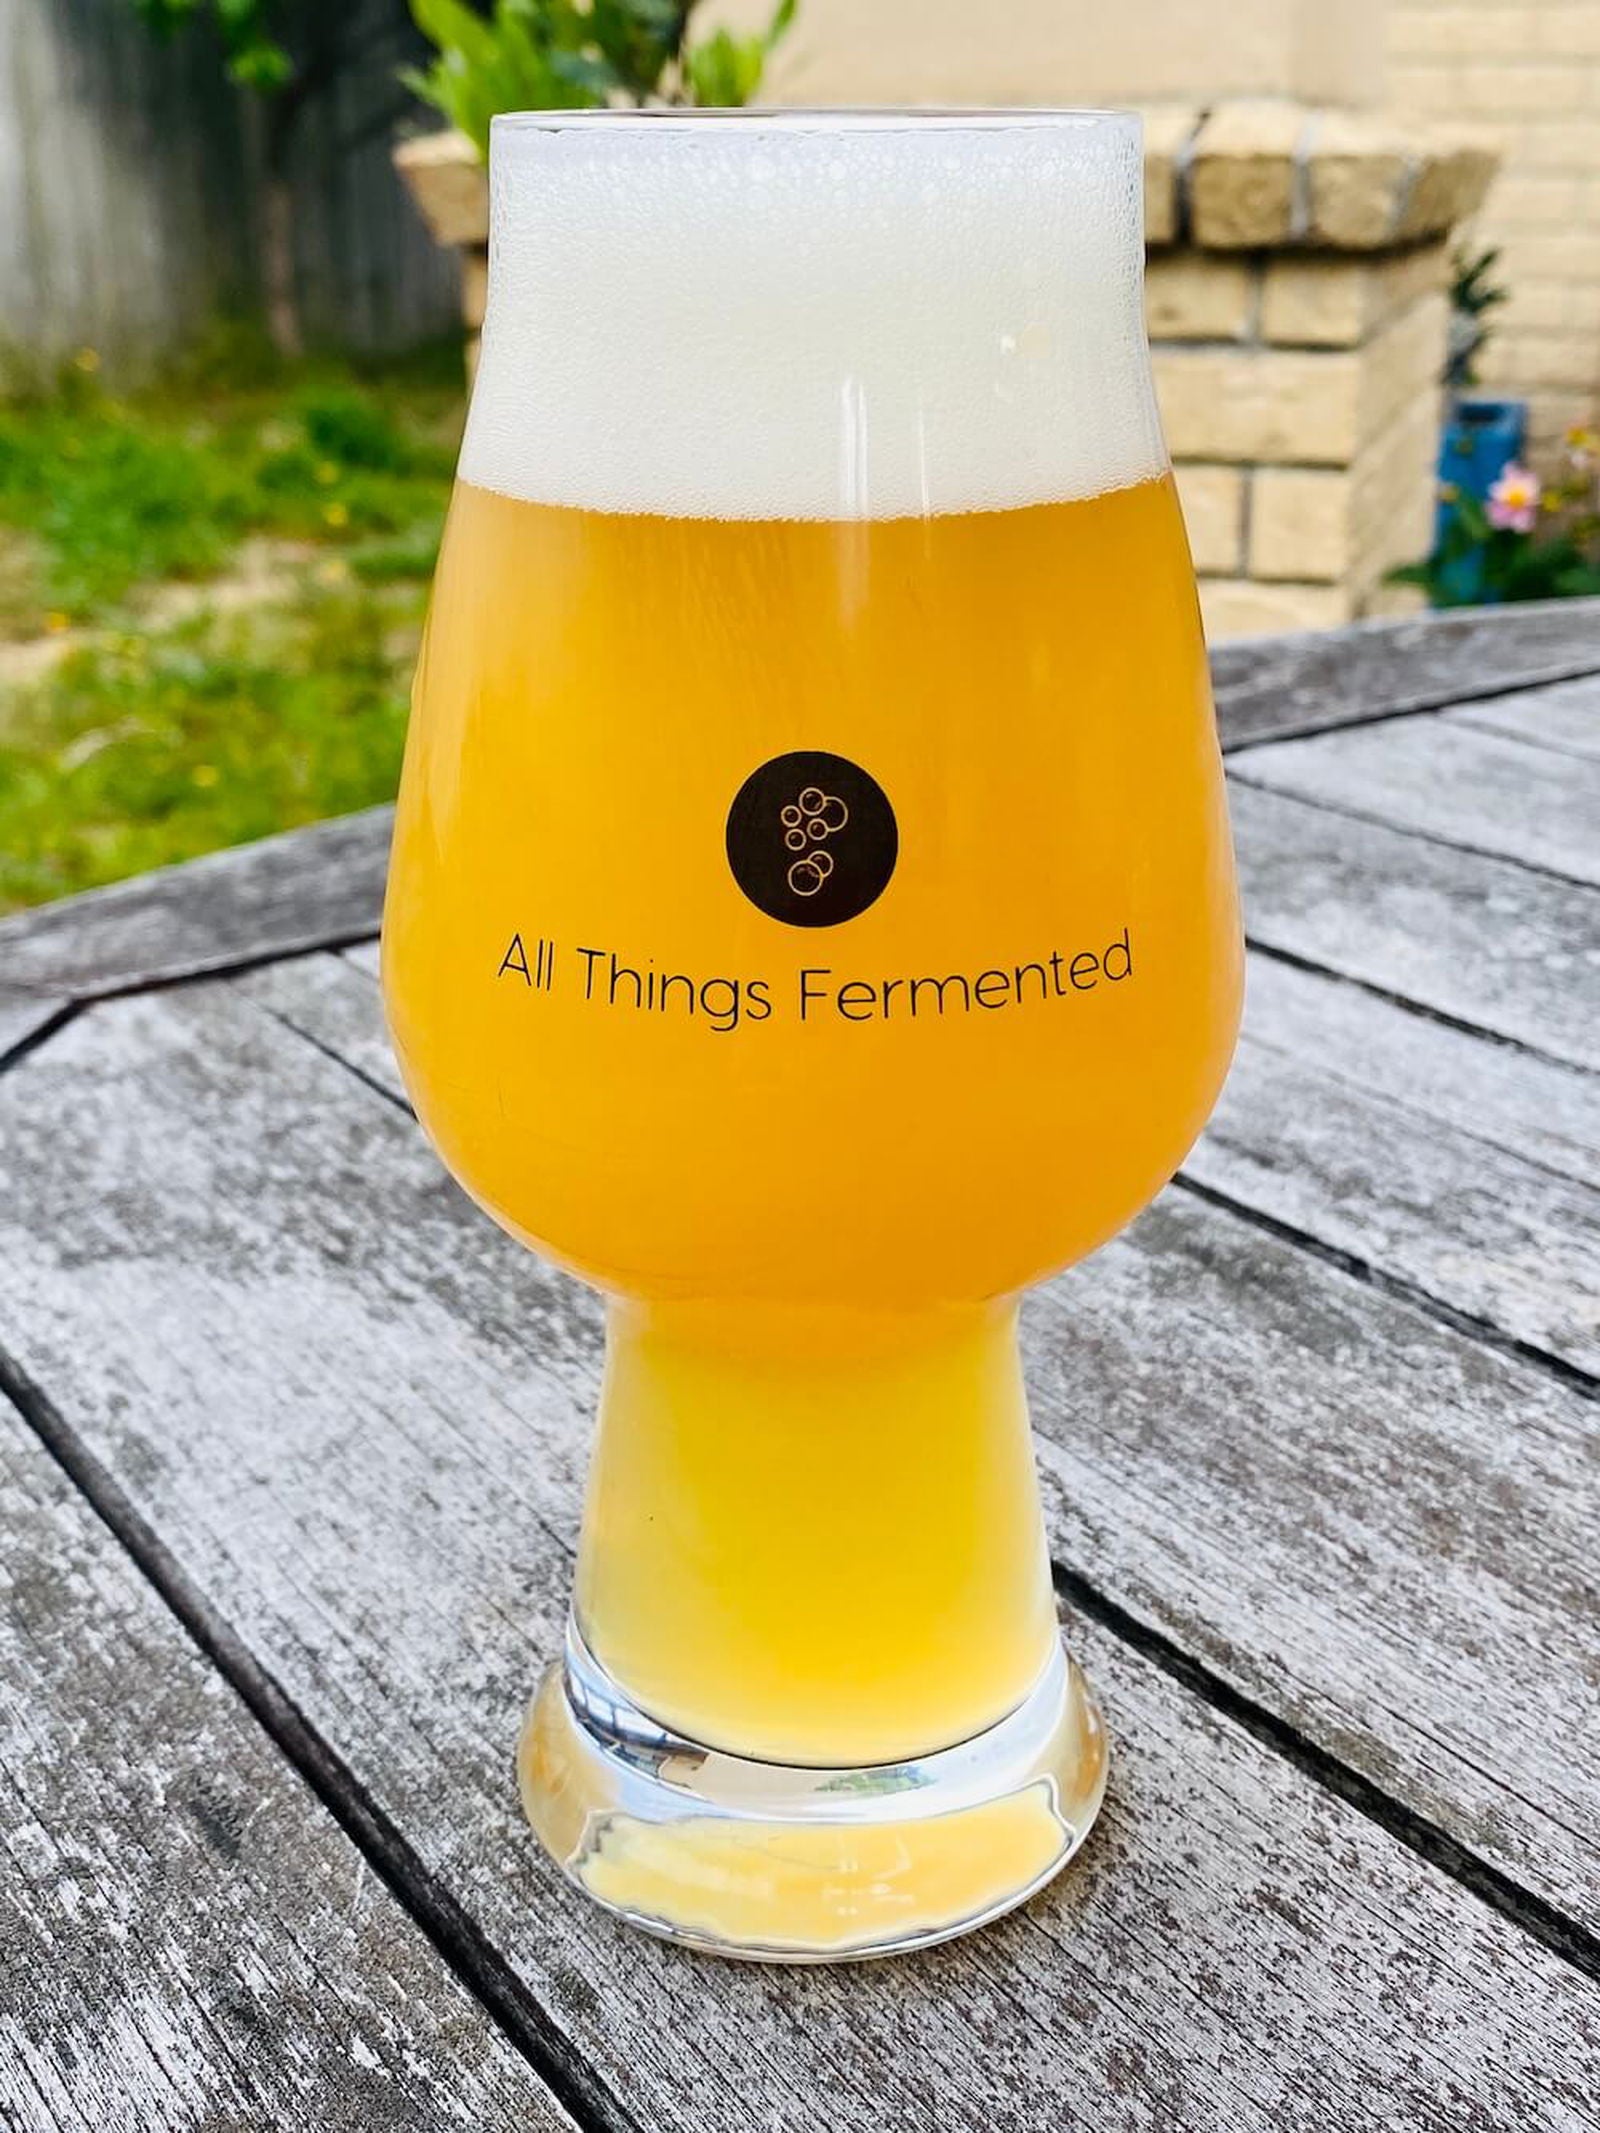 All Things Fermented IPA Glass - 540ml - Set of Two - All Things Fermented | Home Brew Supplies Shop Wellington Kapiti NZ